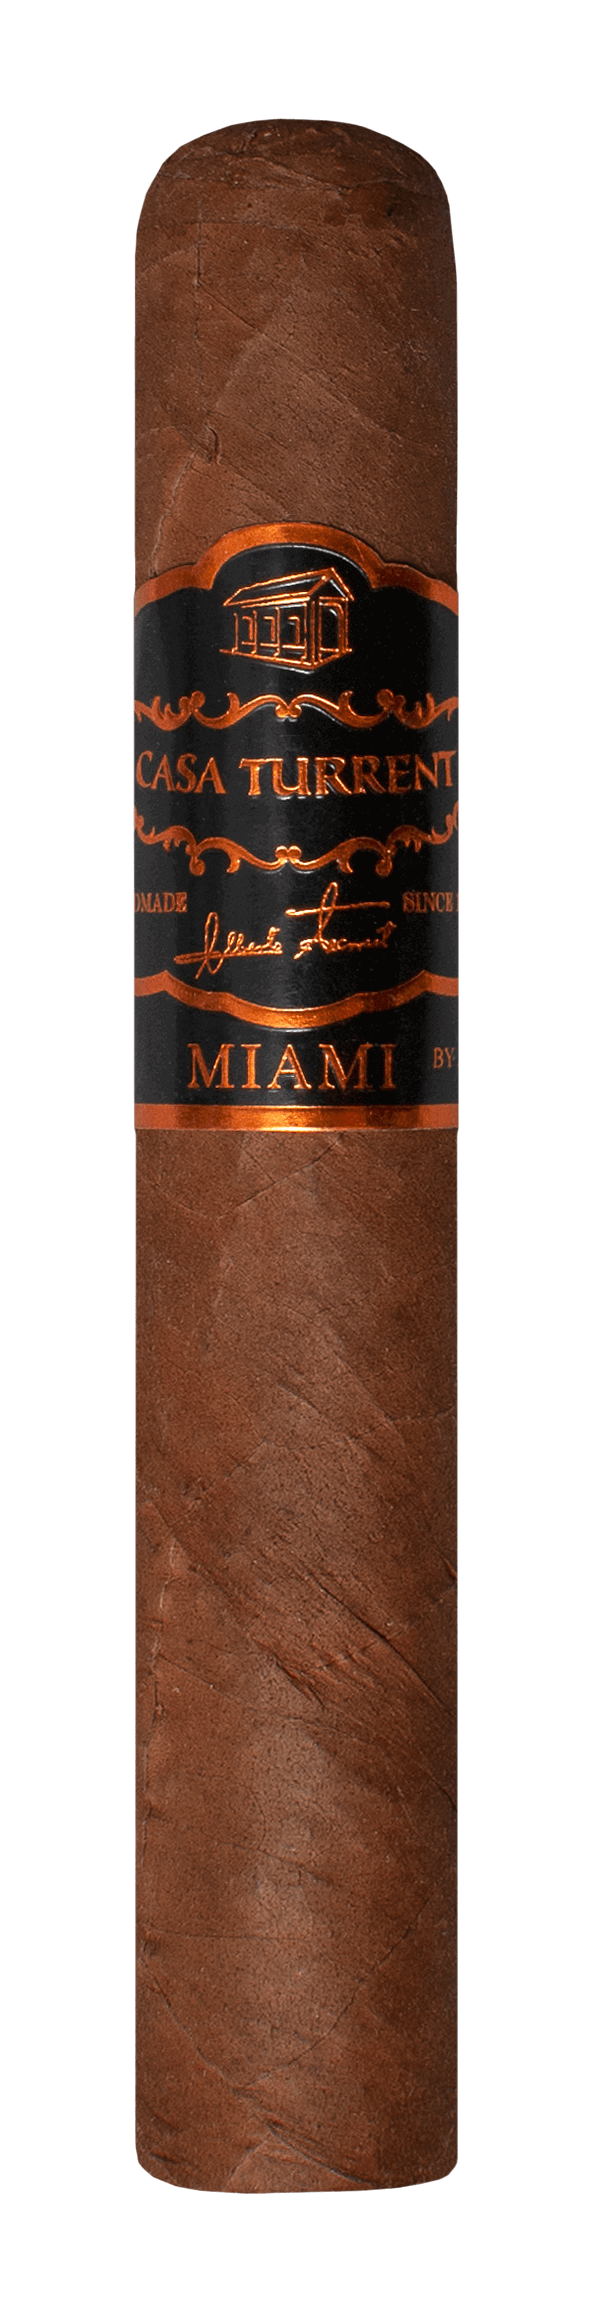 Casa Turrent Origen Miami Zigarre